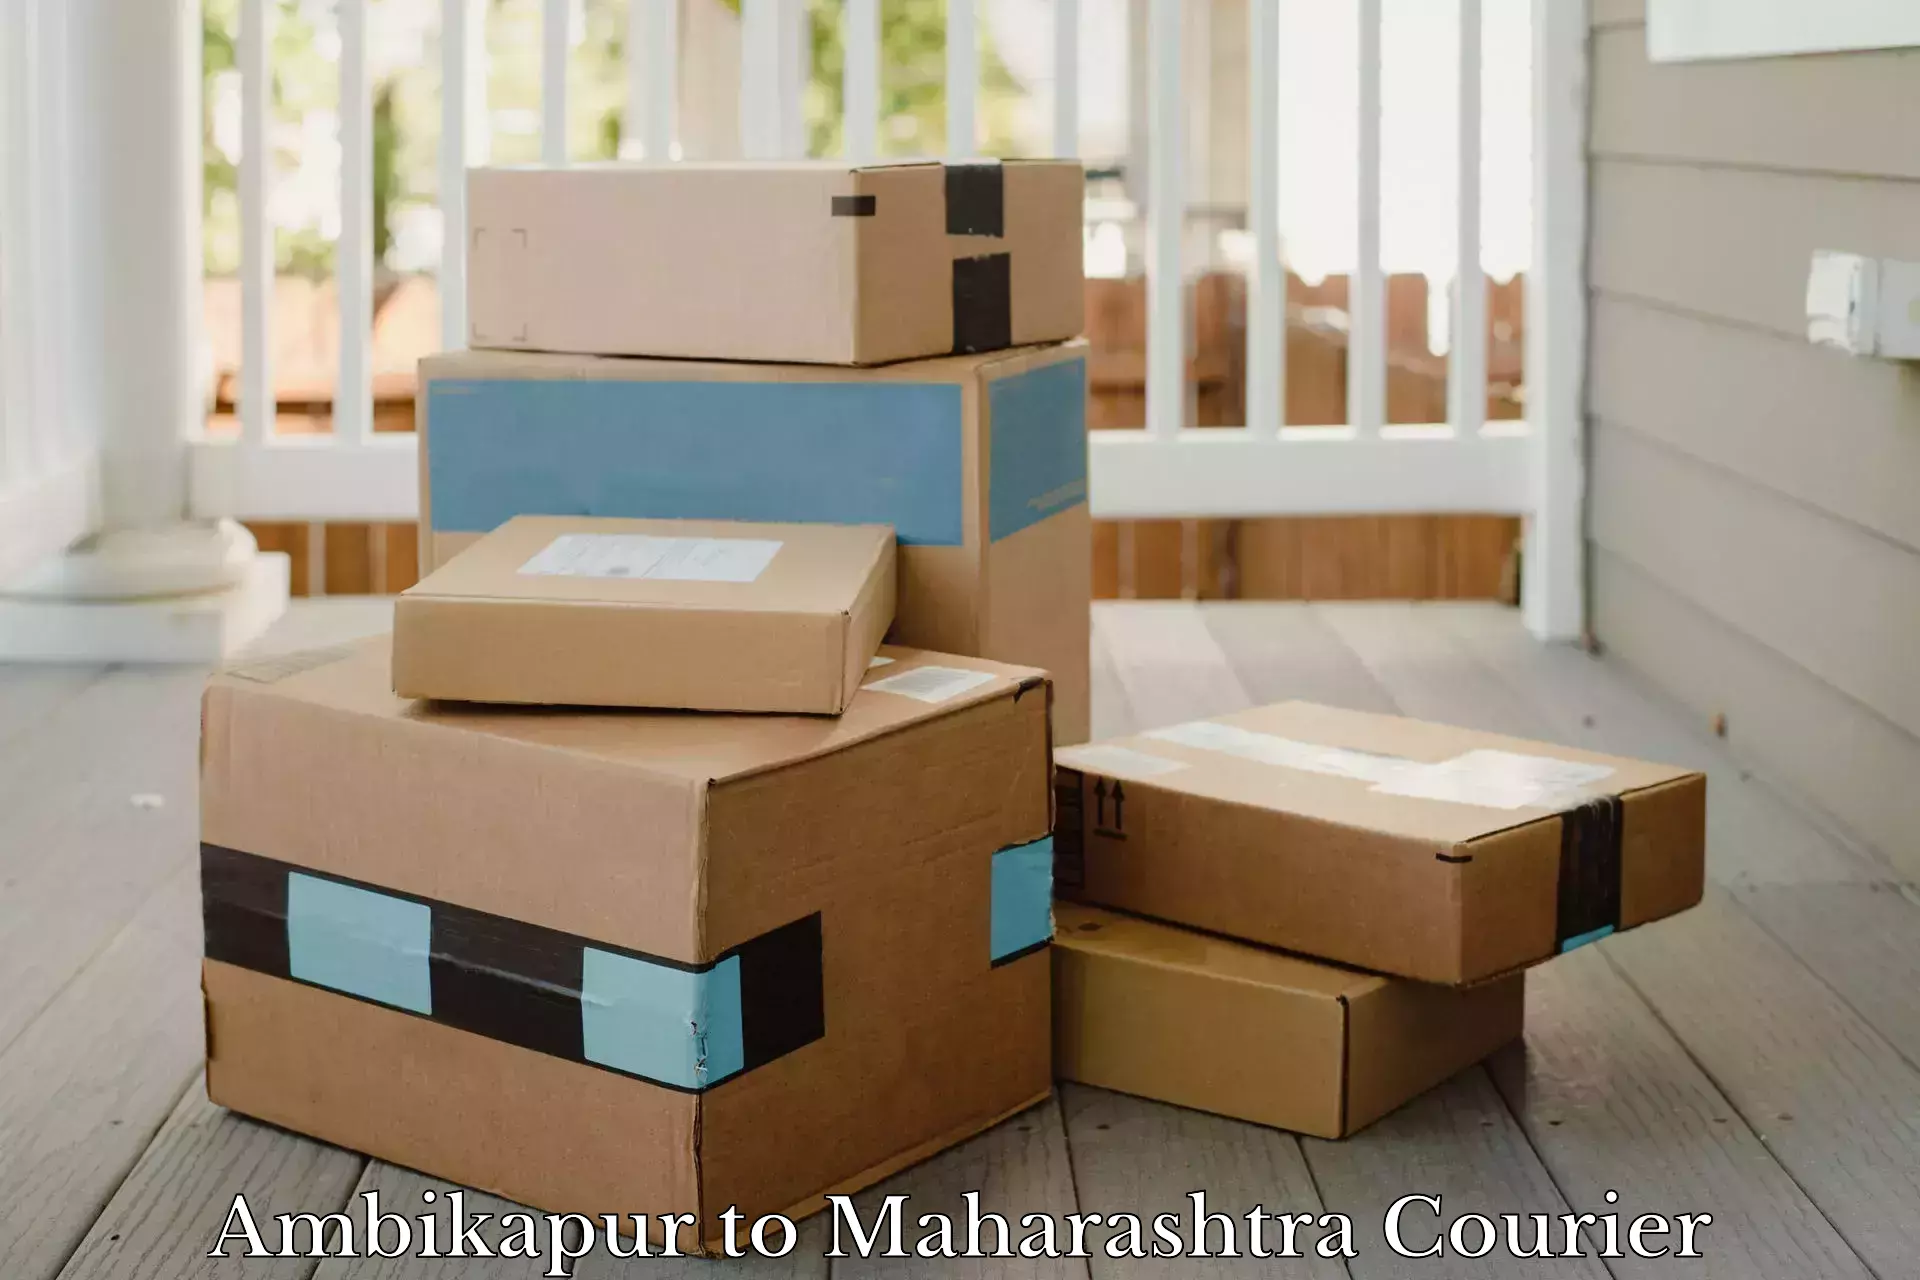 Pharmaceutical courier Ambikapur to Maharashtra